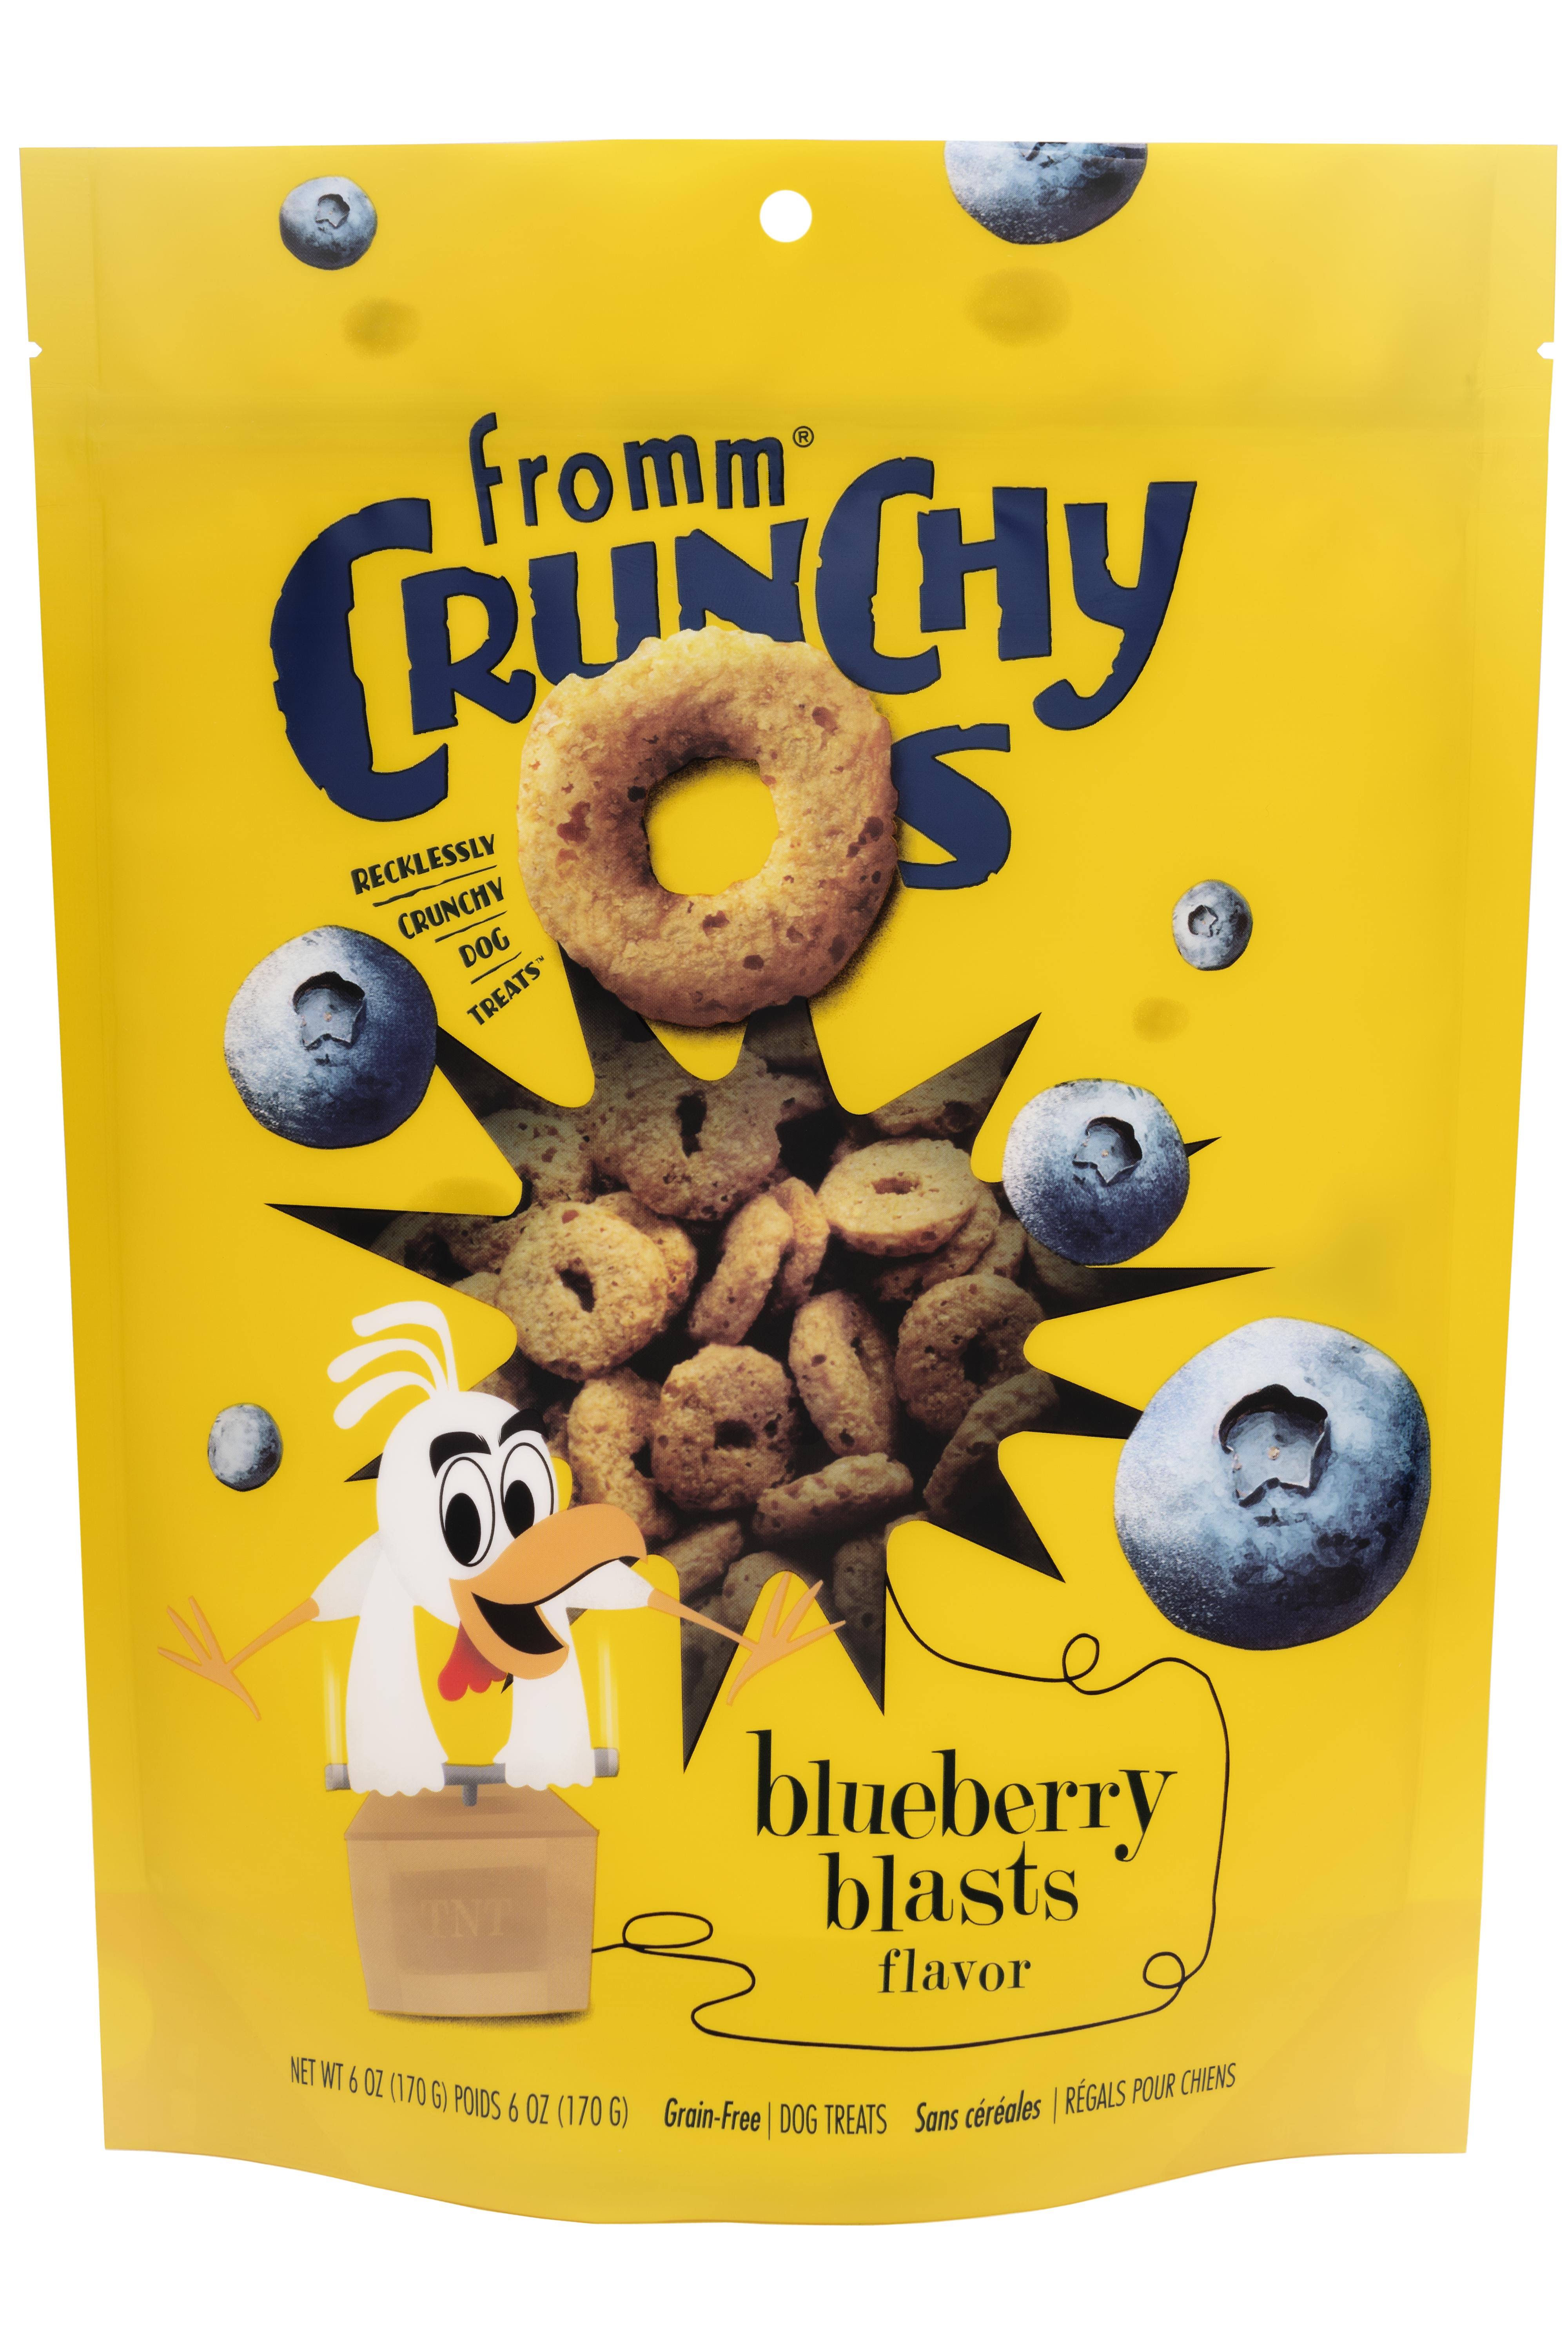 Fromm Crunchy O's Blueberry Blast 26 Oz